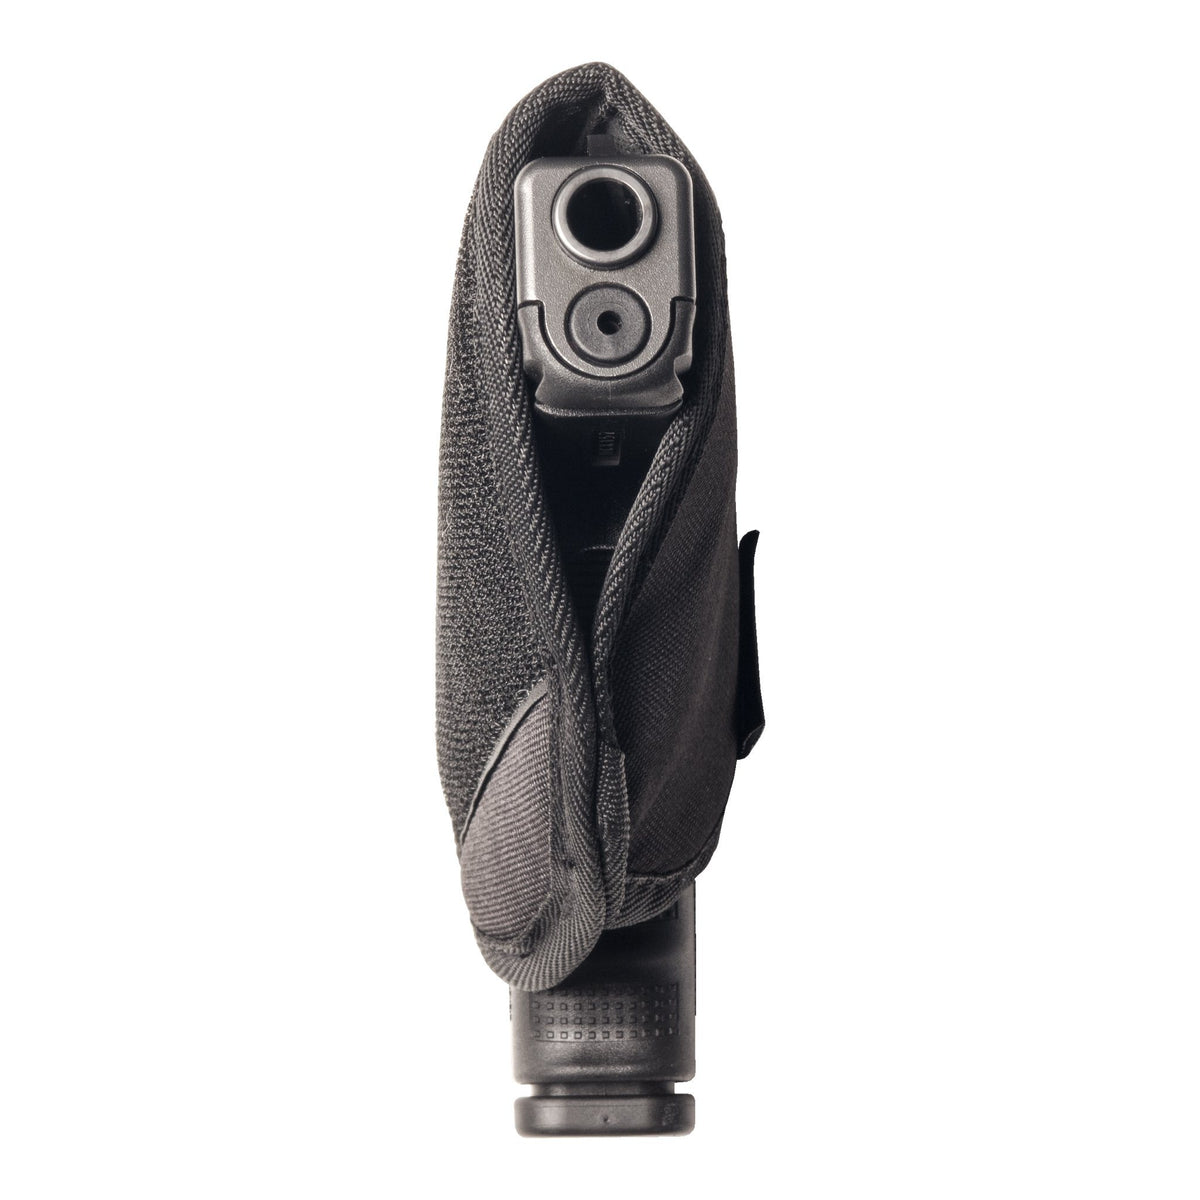 Accessories - Tracker H01 Pistol Pocket / Holster / Pouch